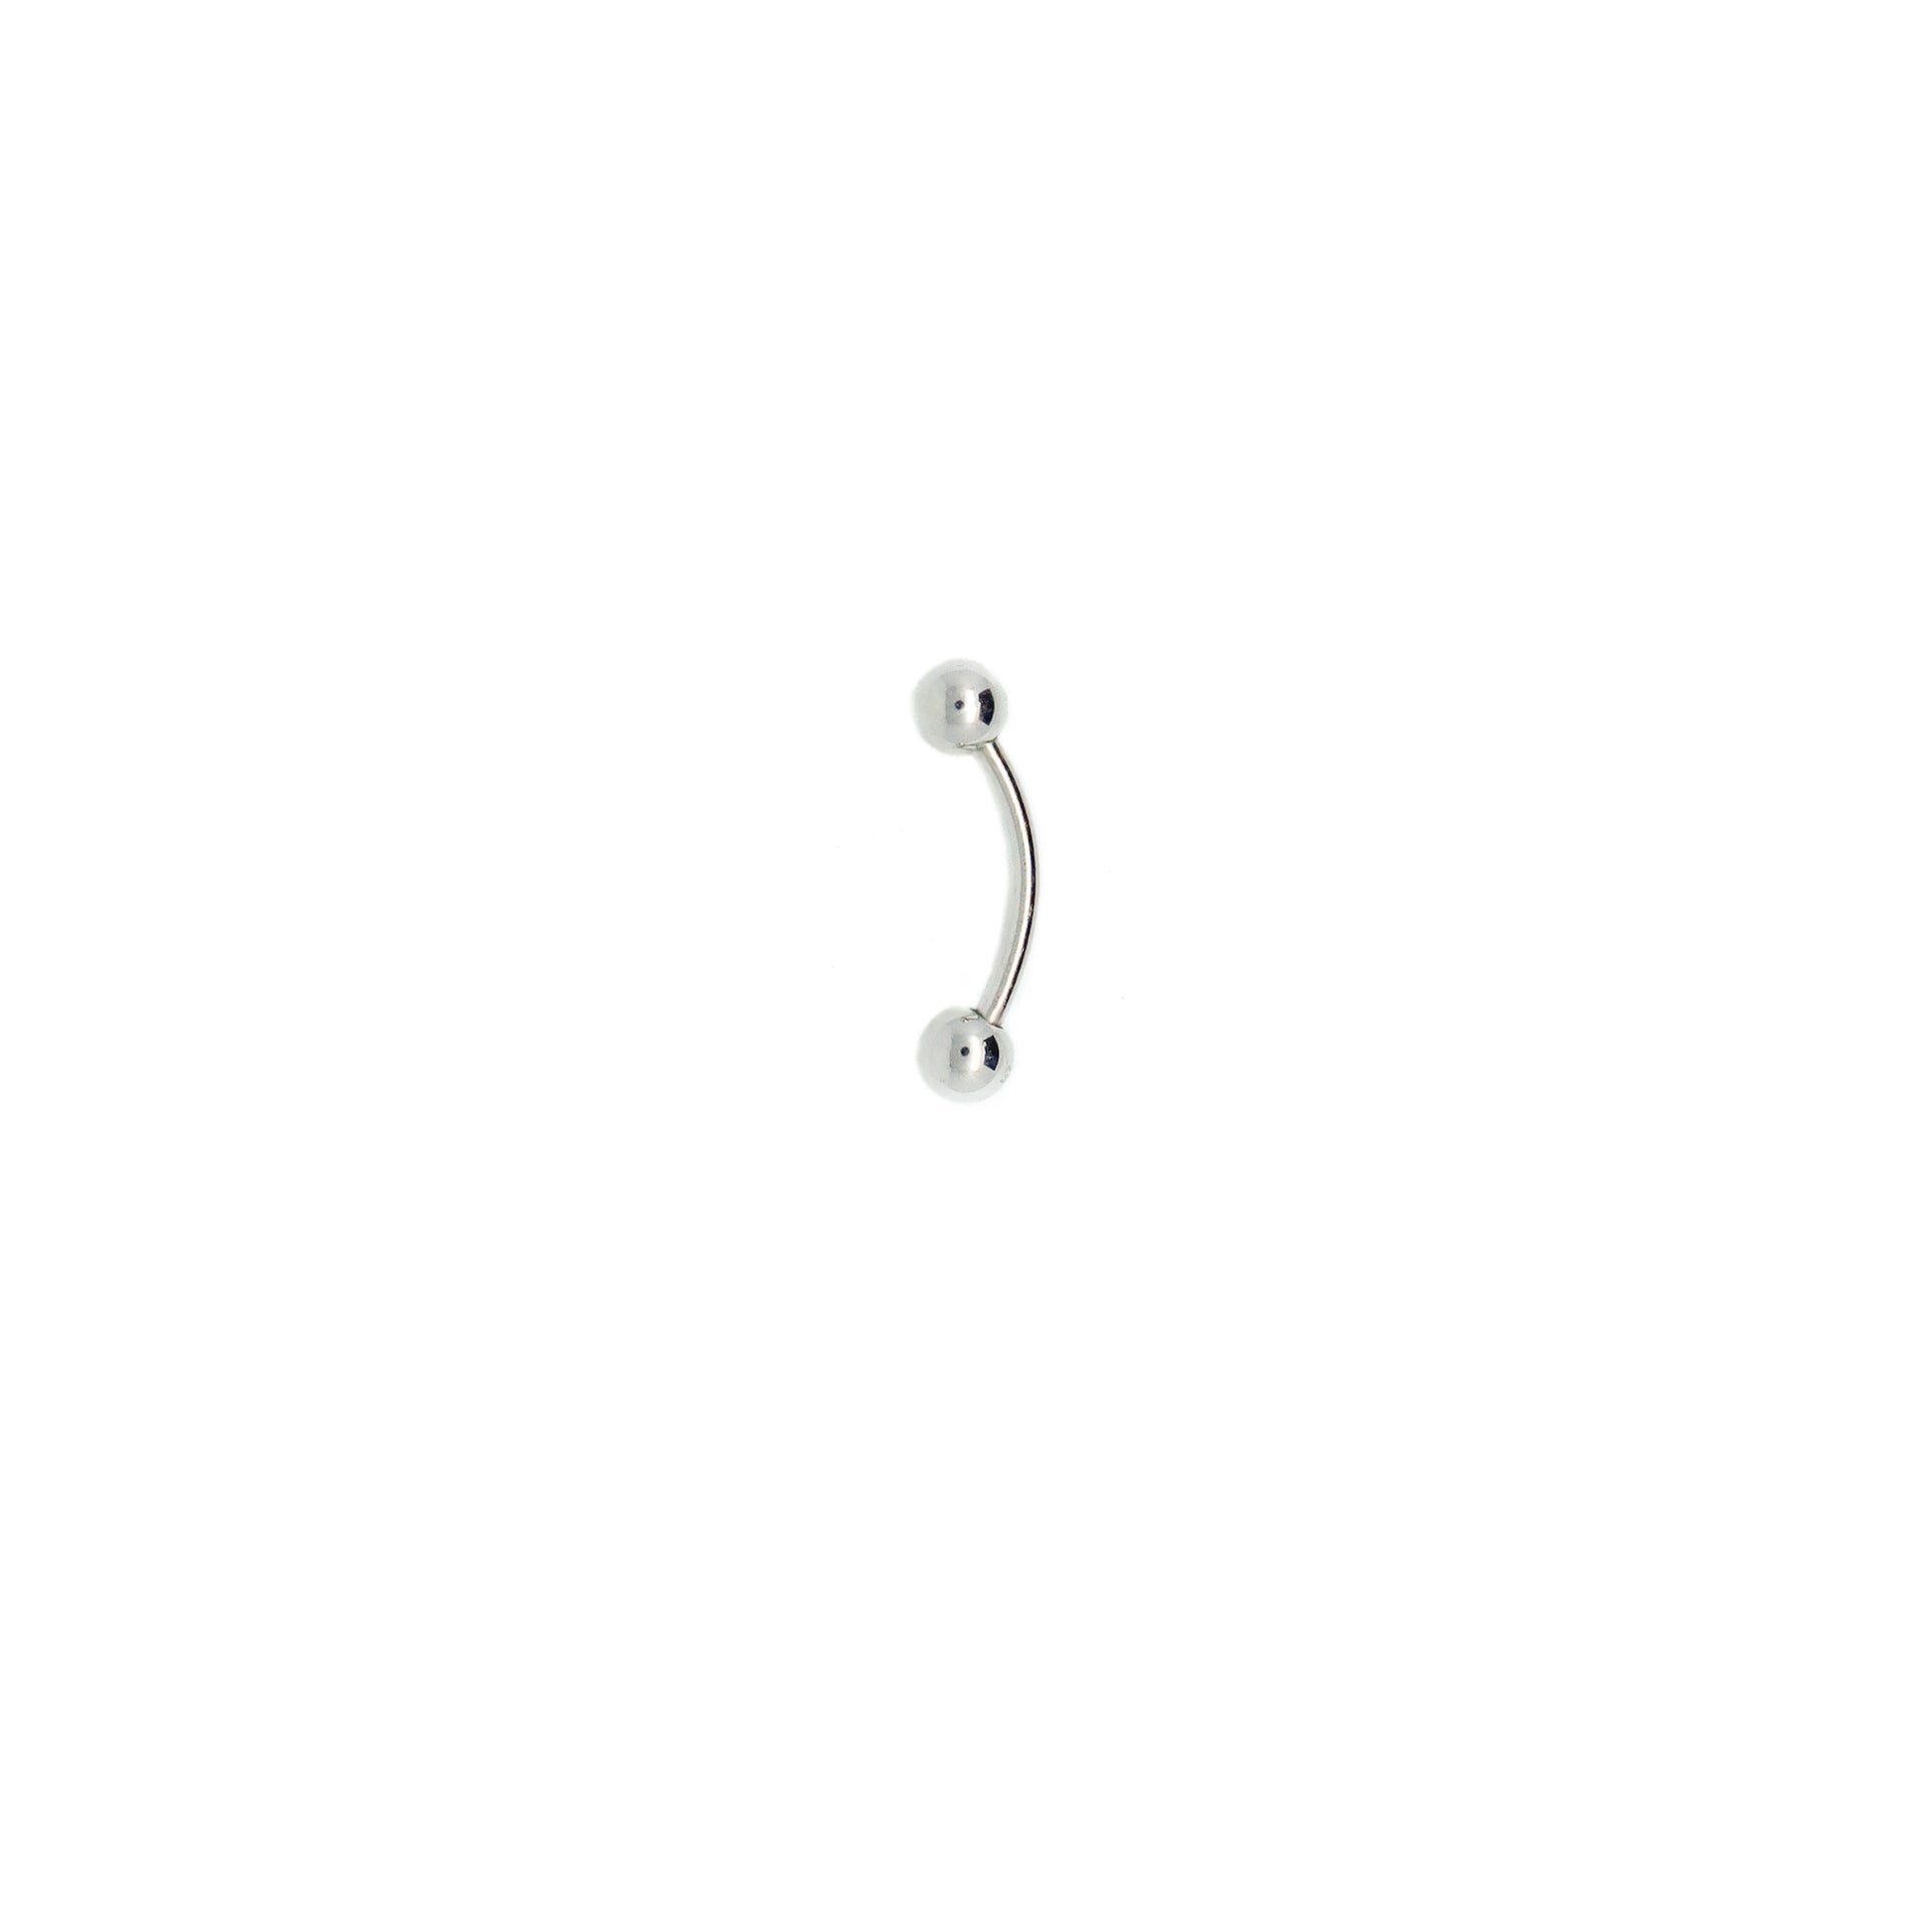 Solid 925 Silver | 20G Curved Barbell Rook Piercing | Snug | Eyebrow | Cartilage | Tragus | Earlobe | 5mm 7mm - Sturdy South